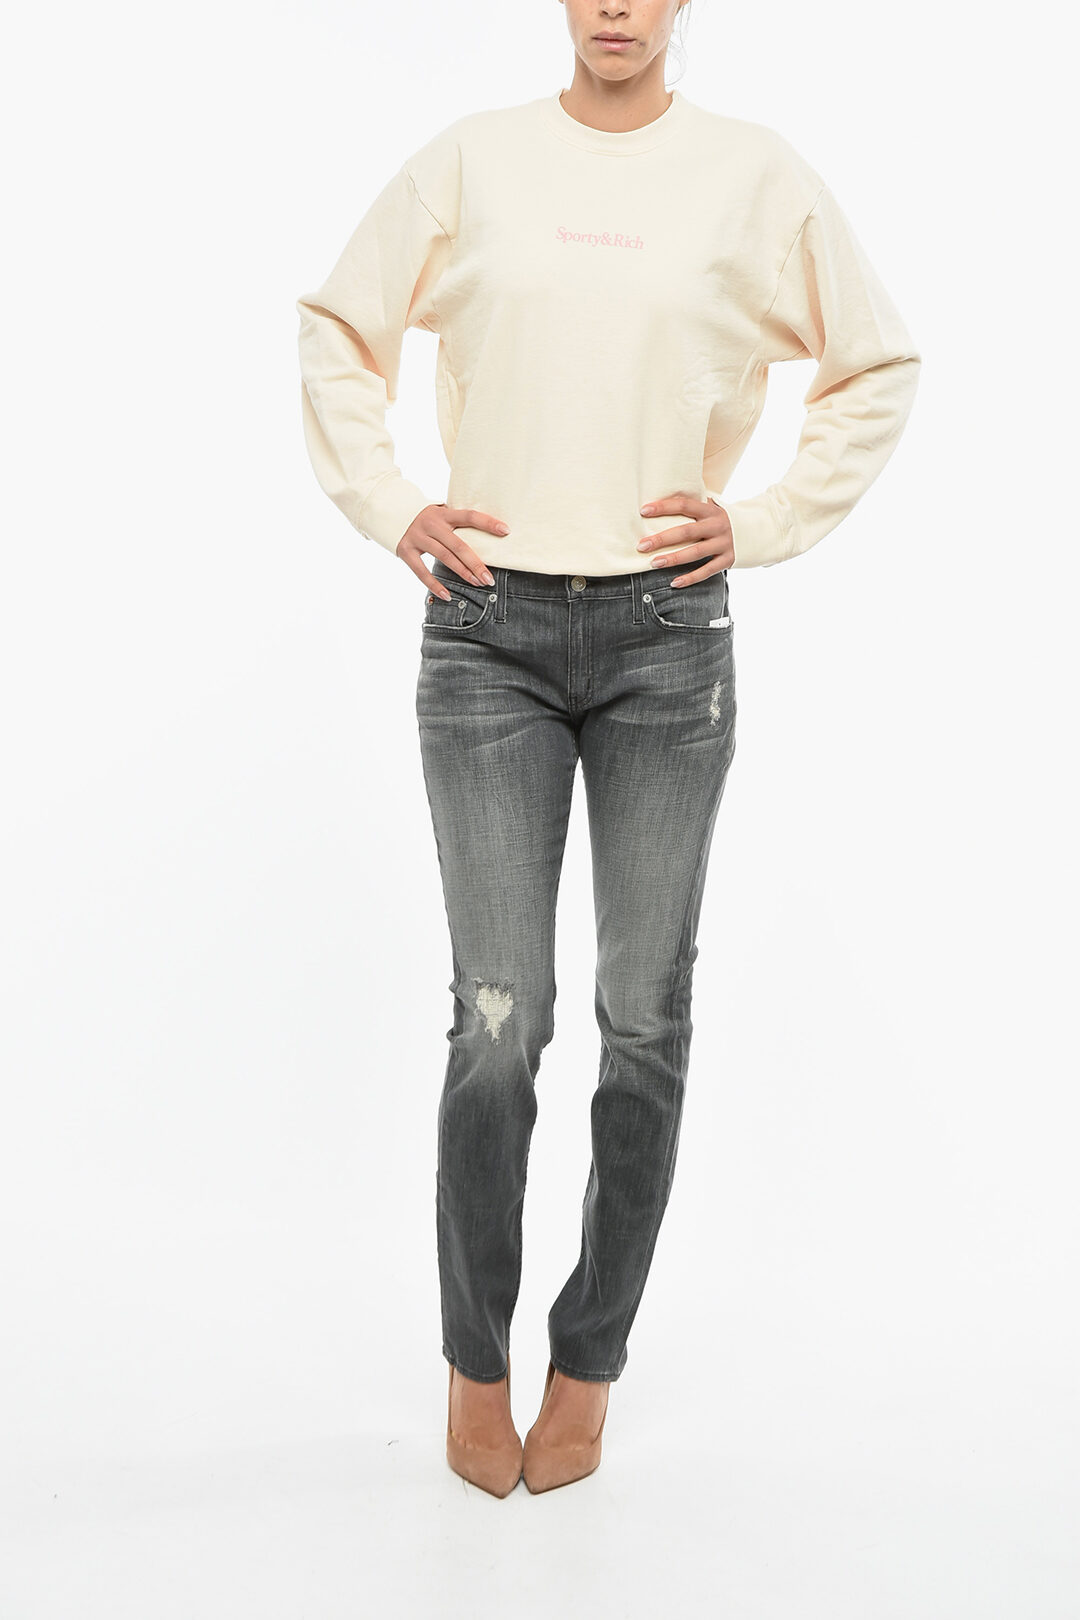 https://data.glamood.com/imgprodotto/stretch-cotton-slim-fit-skylar-jeans-17cm_1429355_zoom.jpg